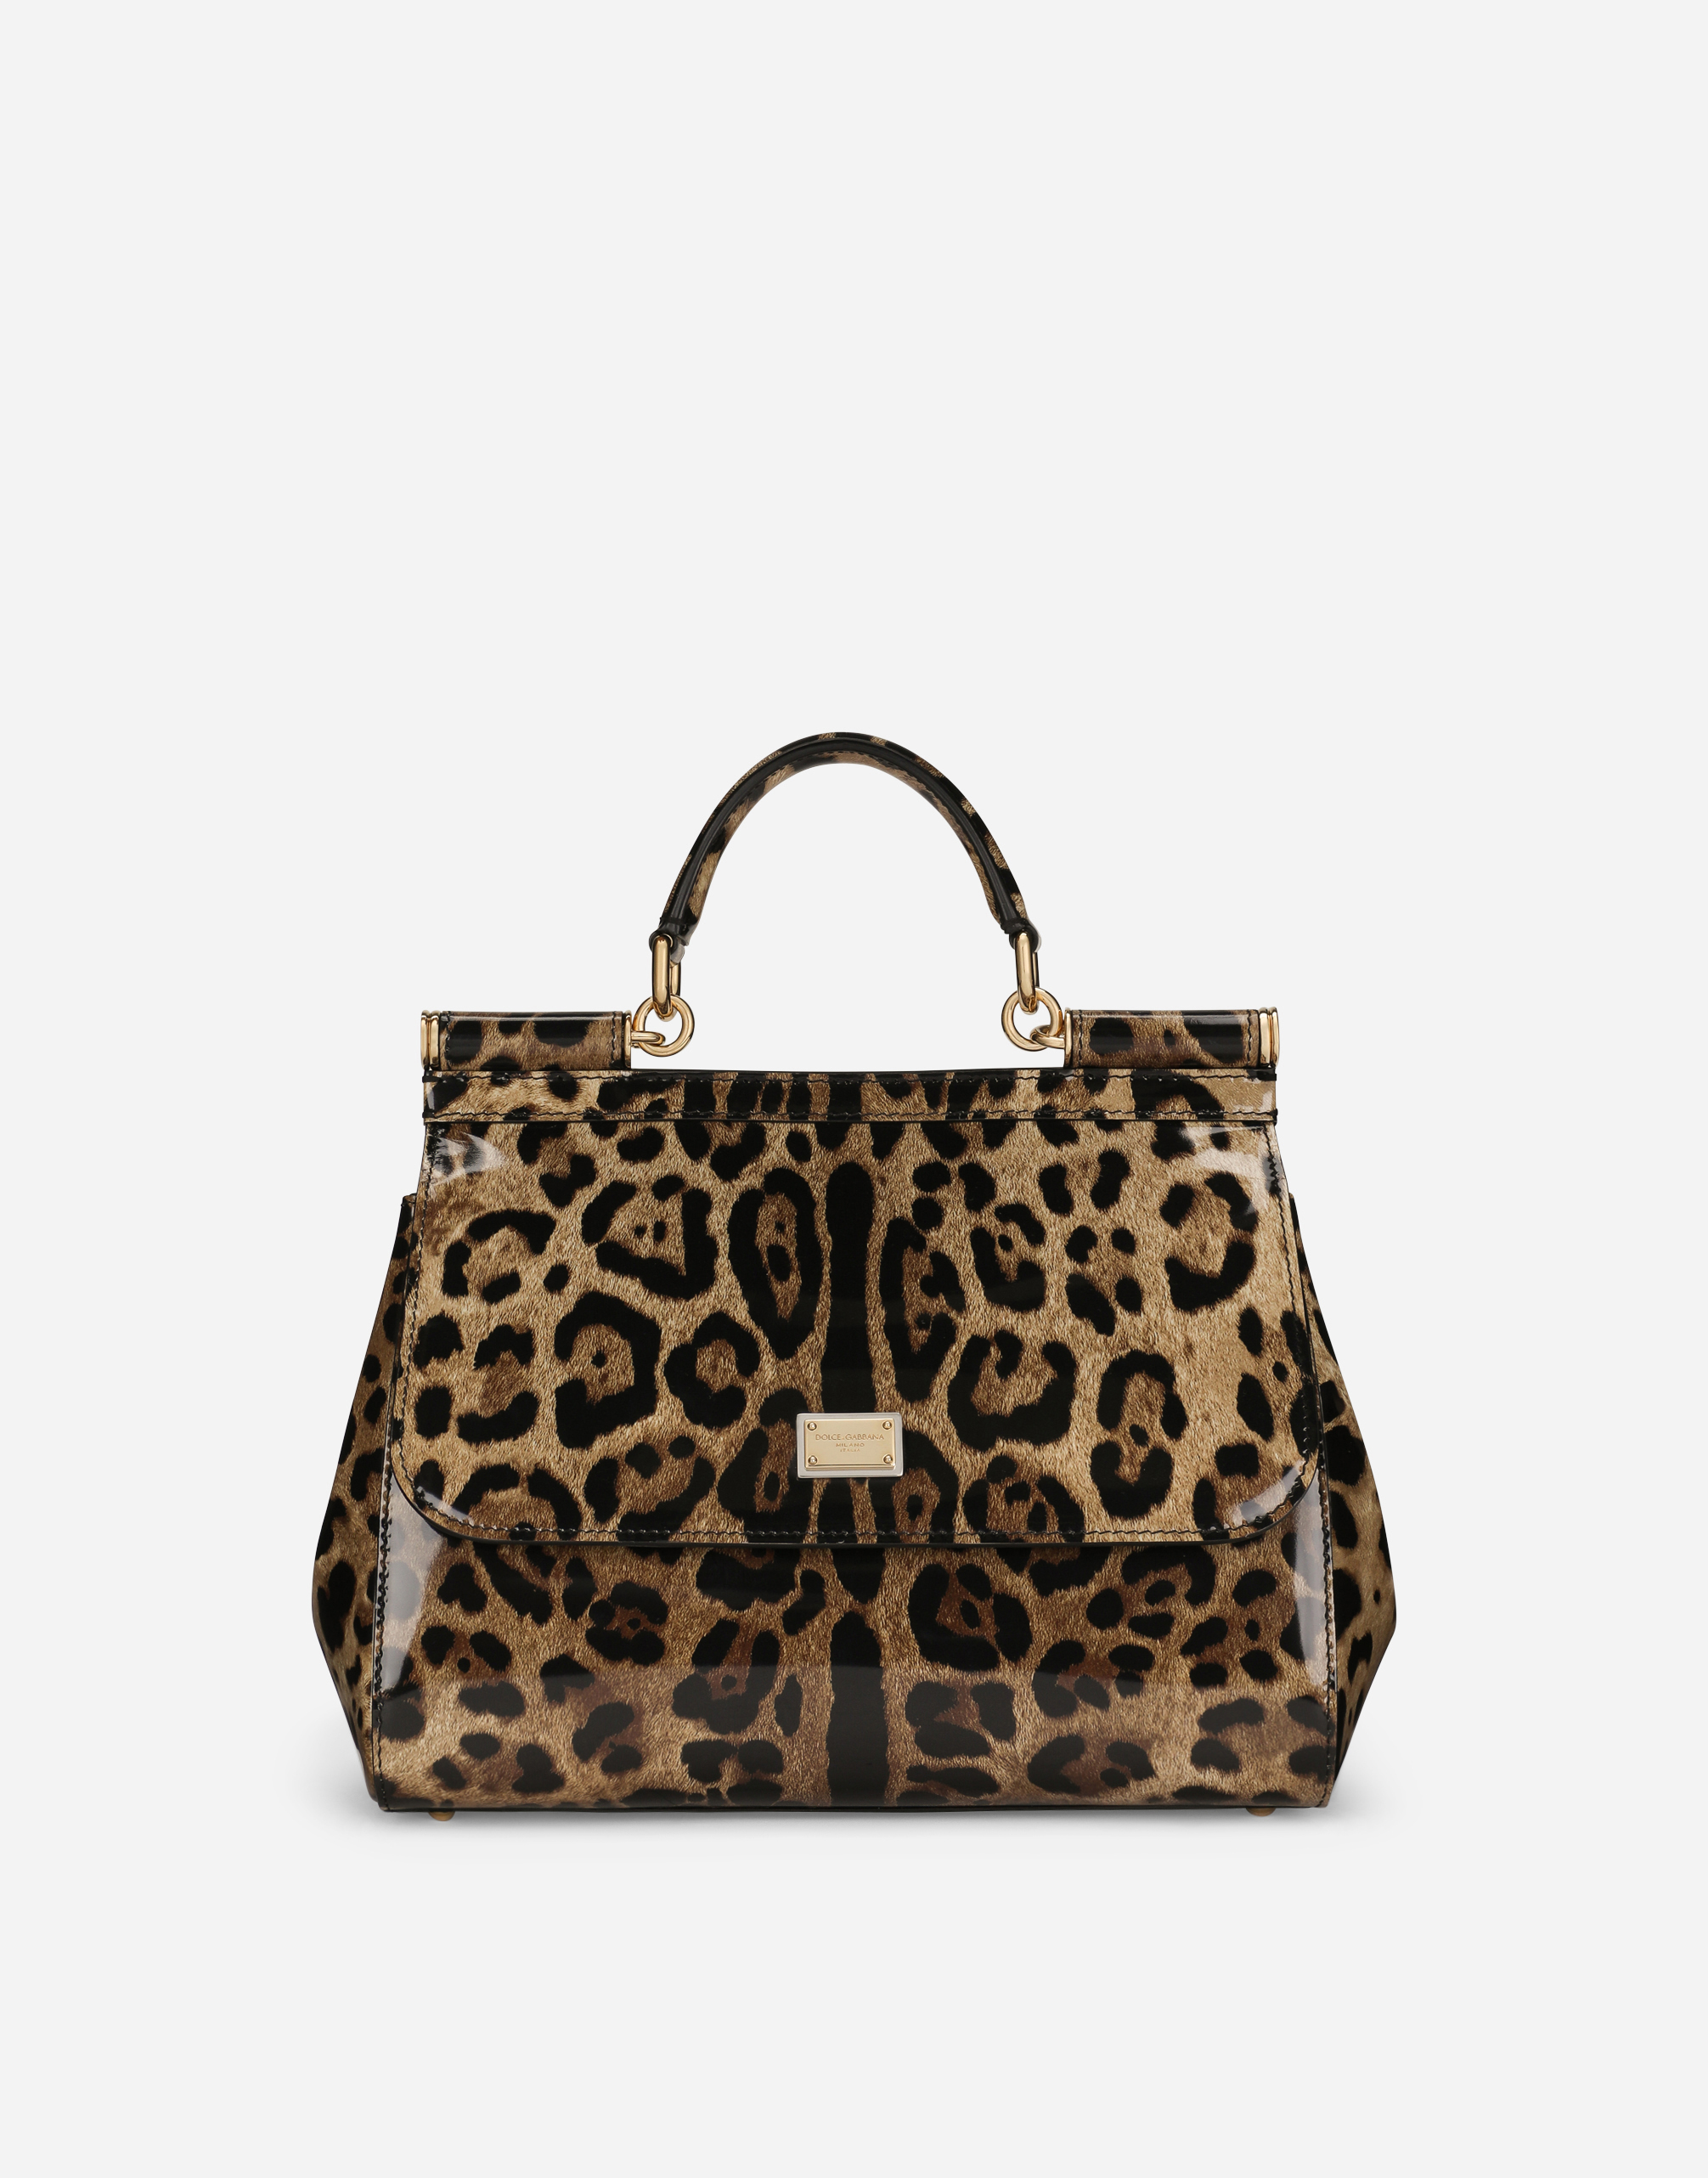 KIM DOLCE&GABBANA Medium Sicily bag in leopard-print polished calfskin in Animal Print